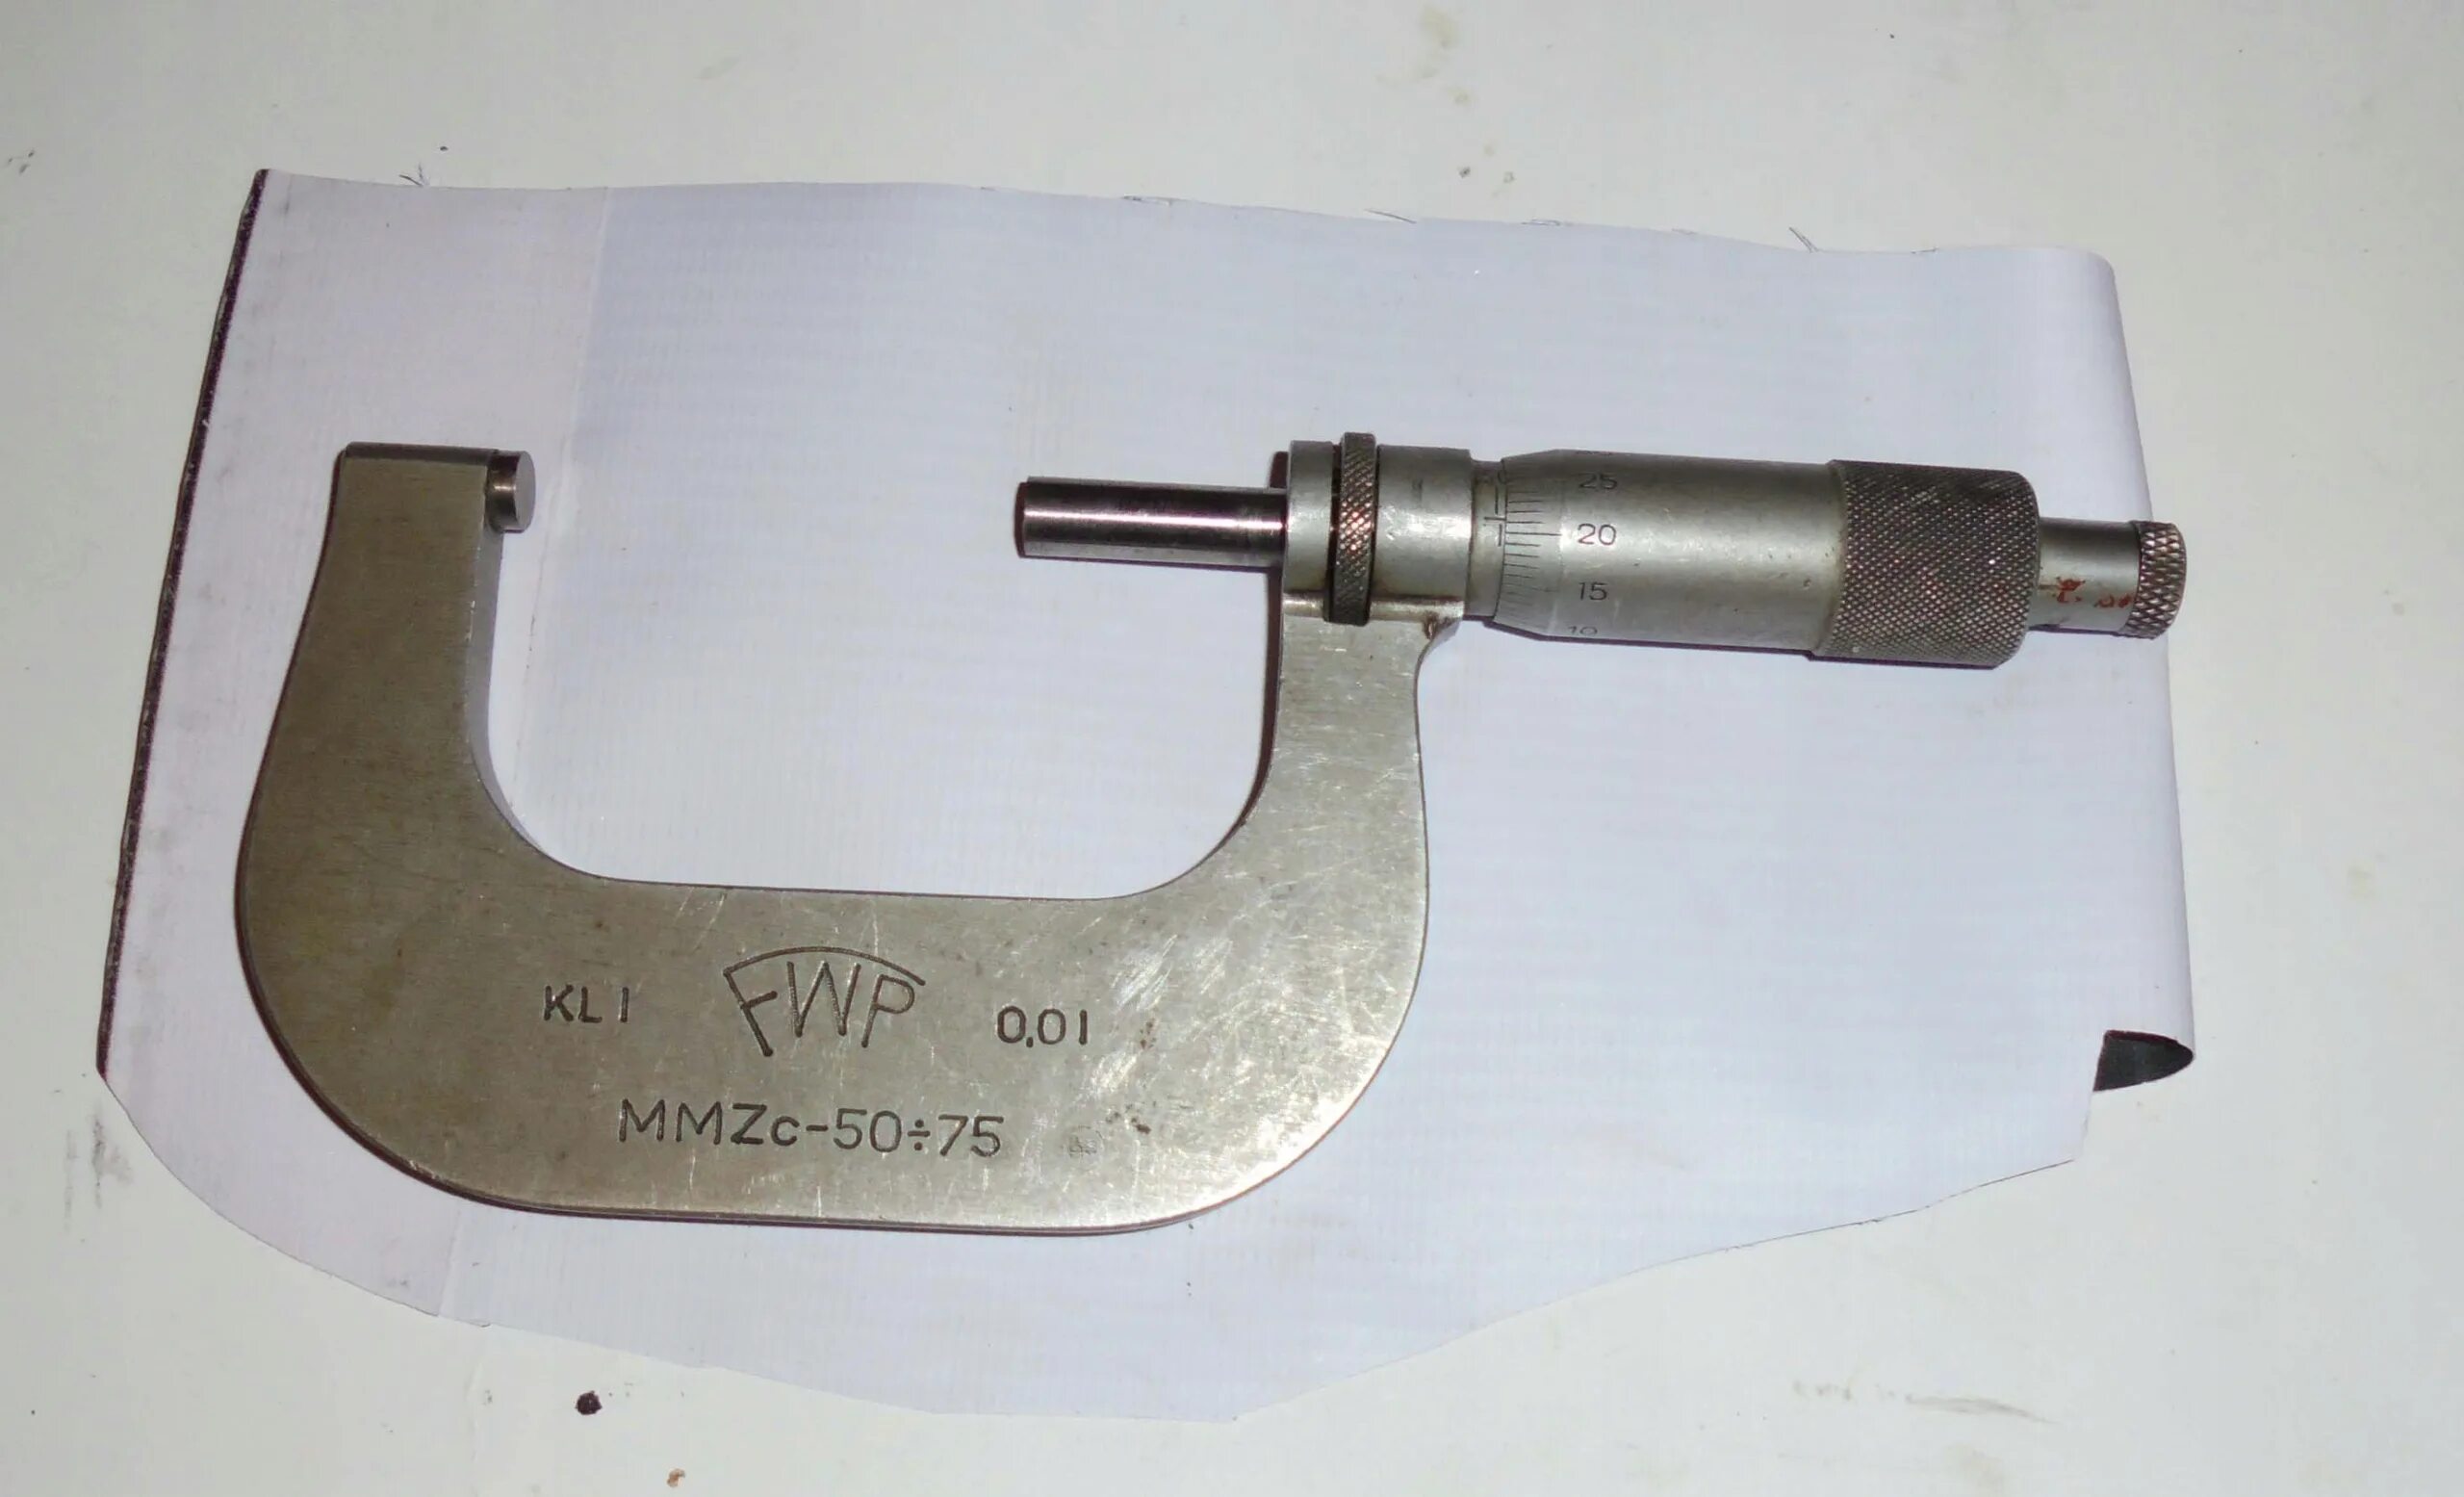 Микрометр трубный МТ -25-1-8. МР-50 микрометр листовой. Микрометр vis 50-75мм (Польша. FWP микрометр.